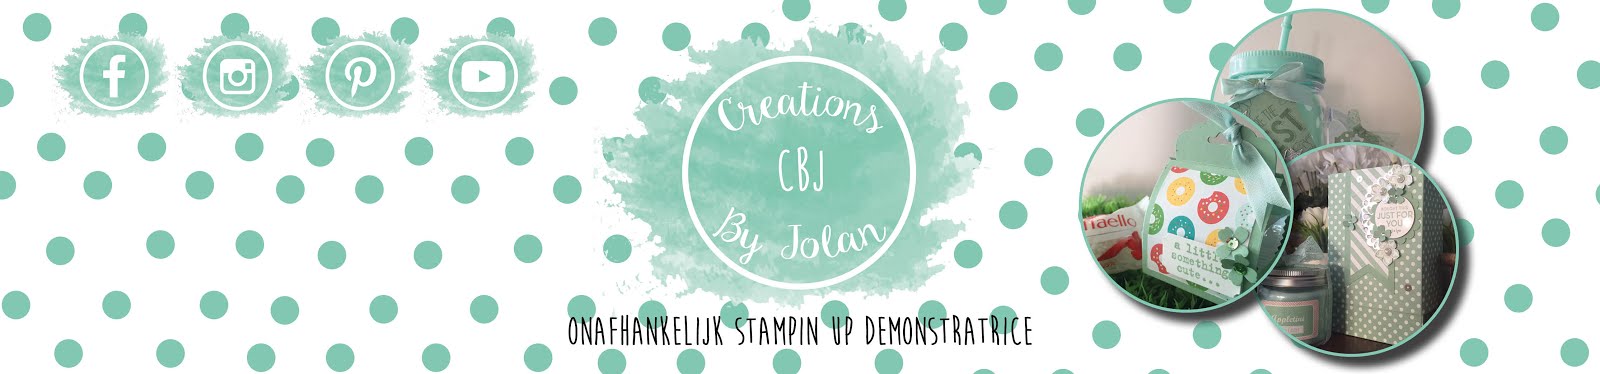 Stampin'Up demonstrator Creations by Jolan